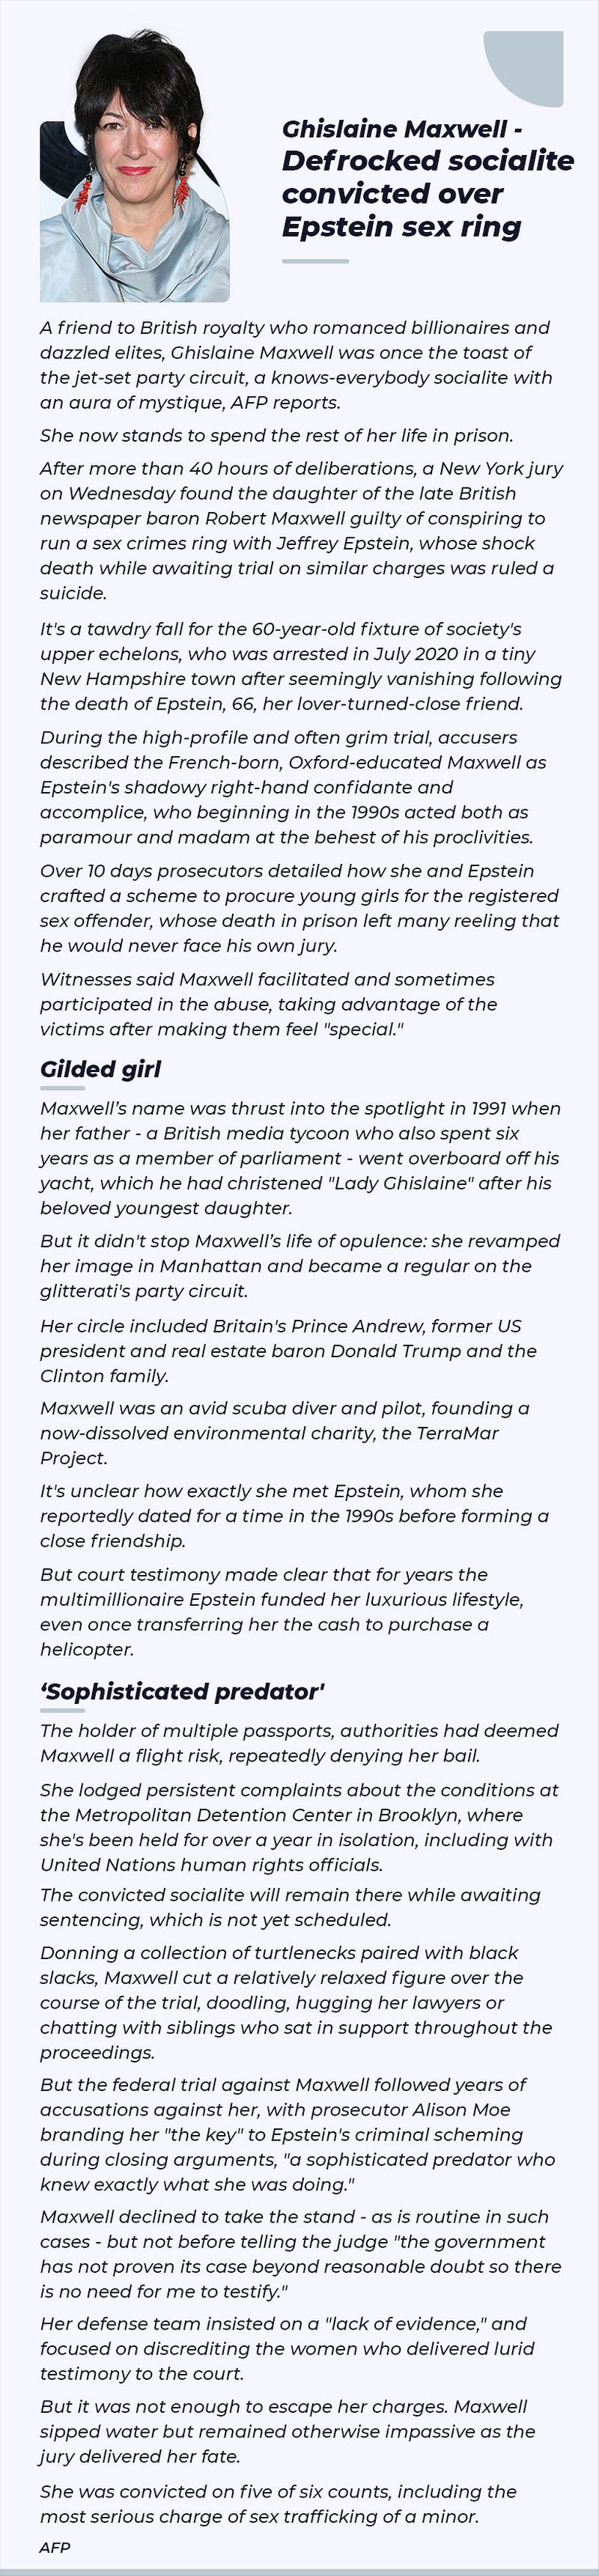 Ghislaine Maxwell profile